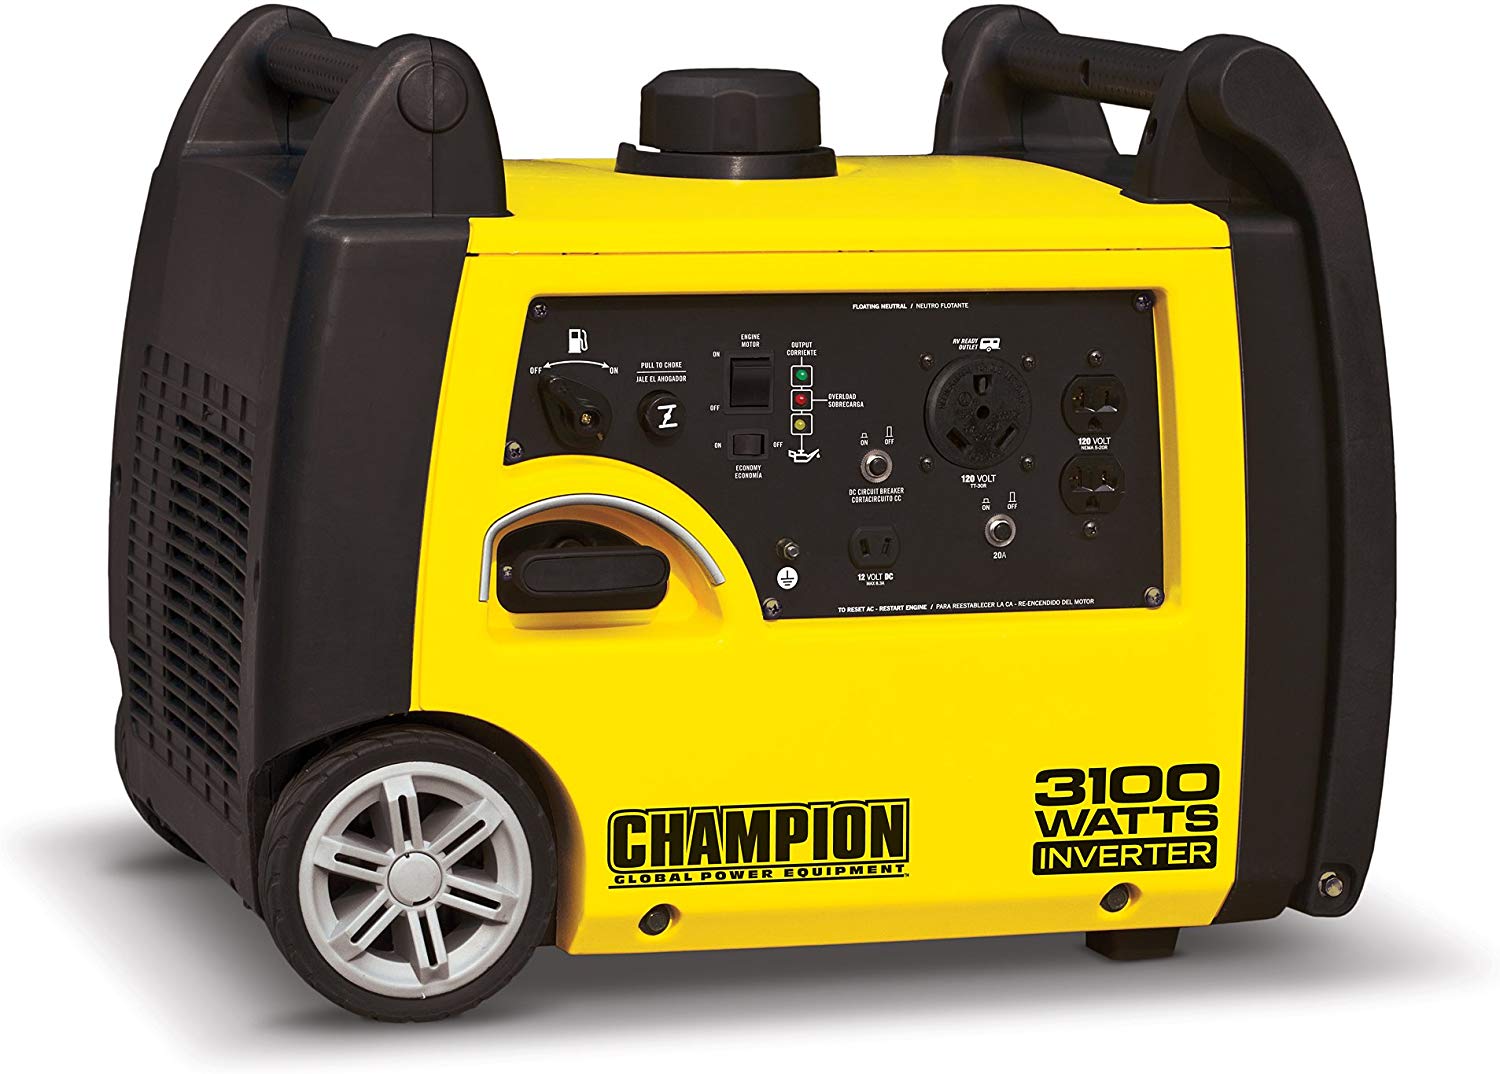 Champion Power Equipment 75531i